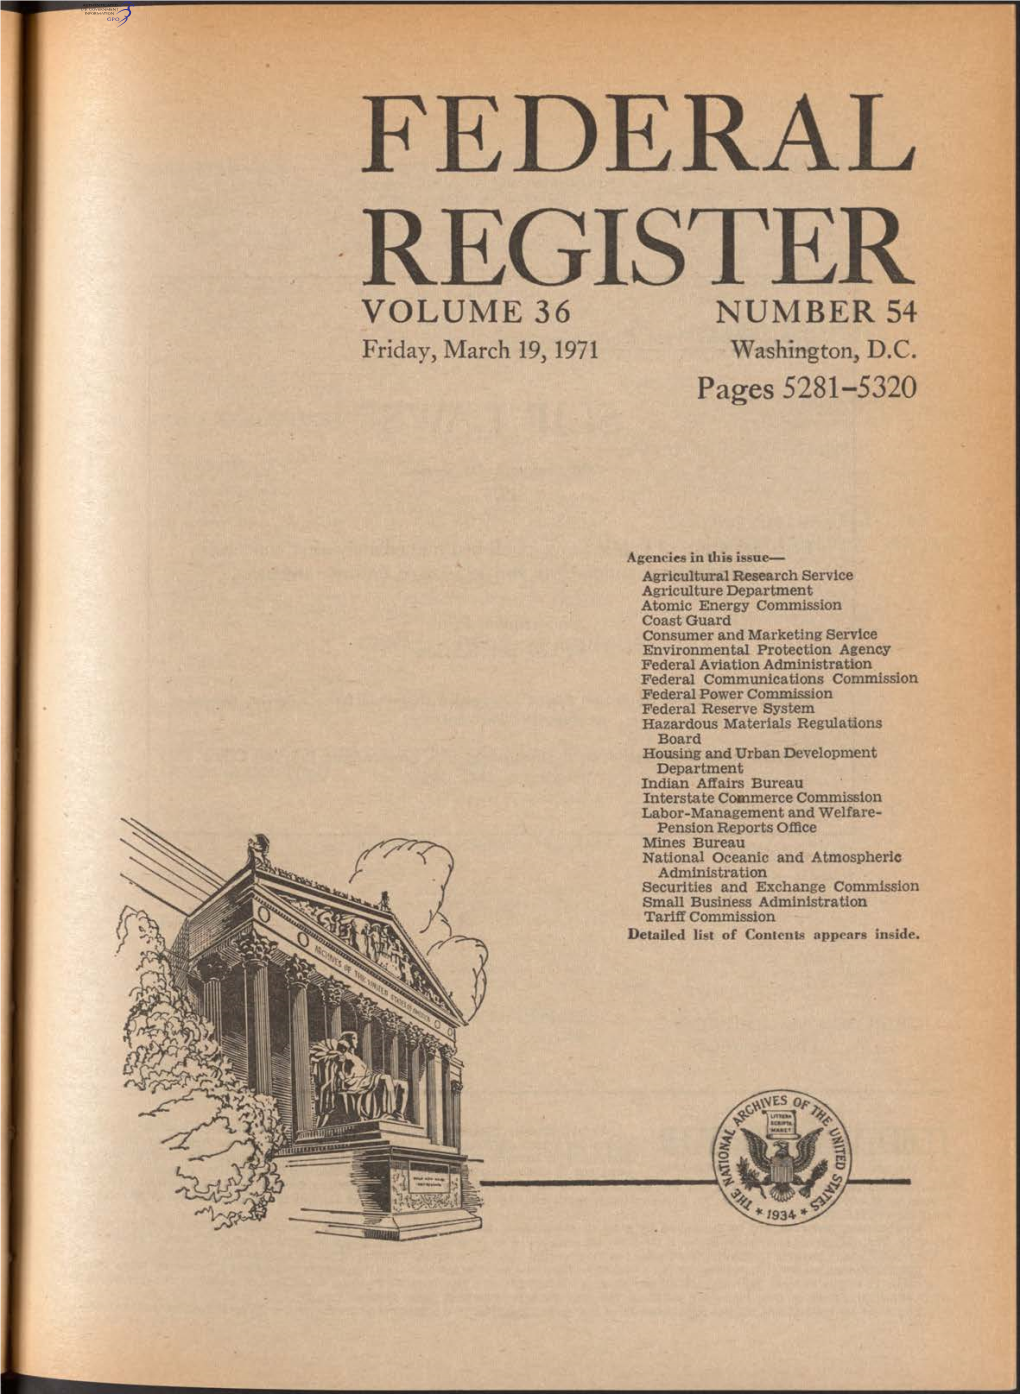 FEDERAL REGISTER VOLUME 36 NUMBER 54 Friday, March 19,1971 Washington, D.C